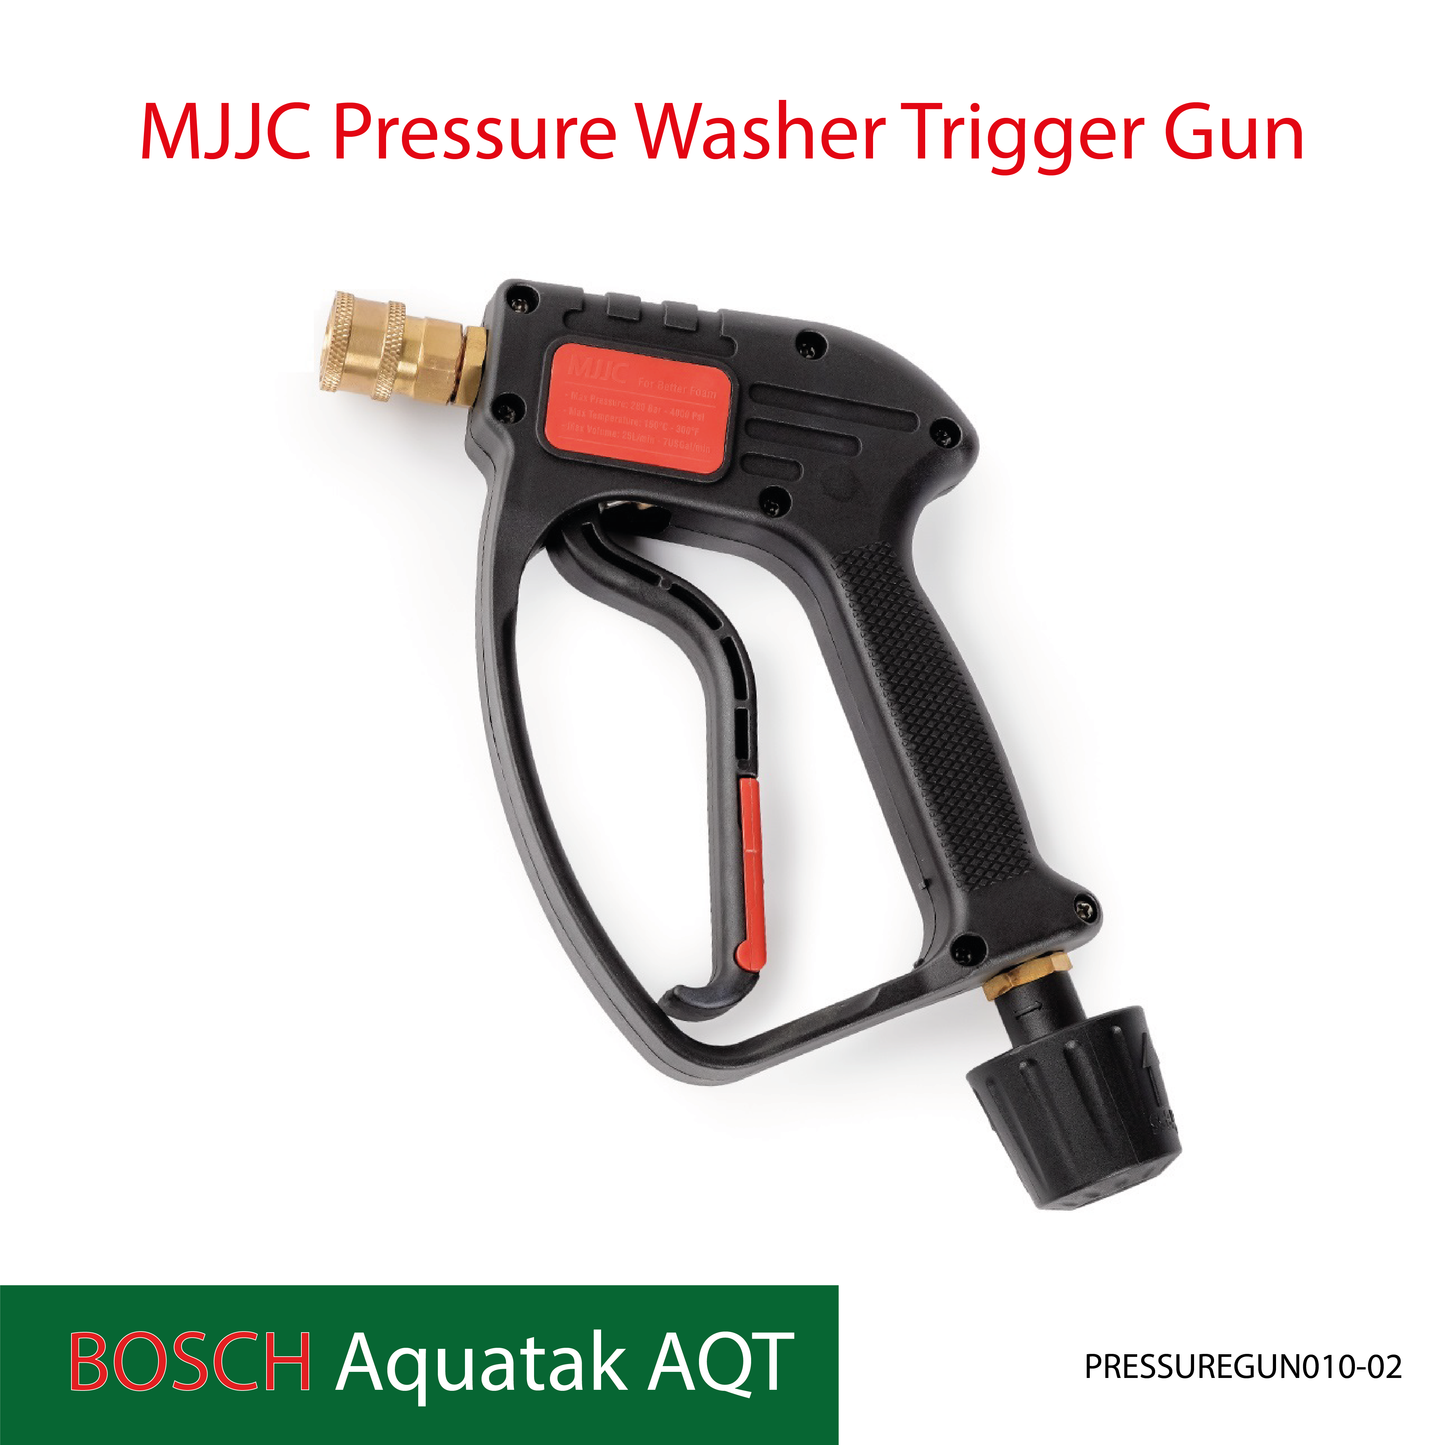 Bosch Aquatak AQT - MJJC Light Weight Pressure Washer Trigger Spray Gun with Live Swivel